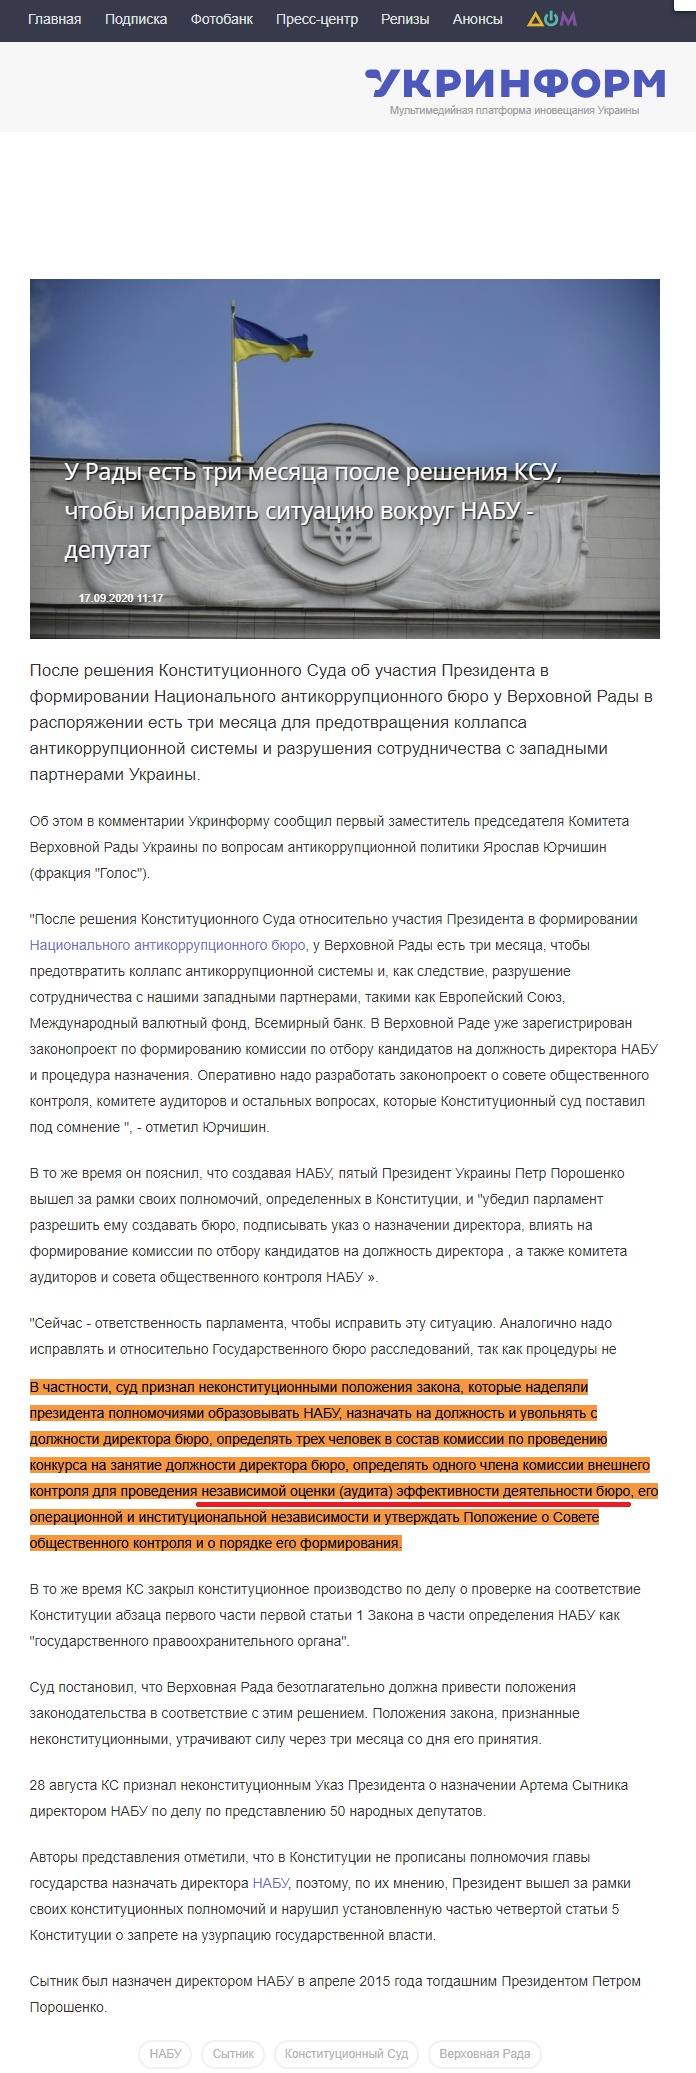 https://www.ukrinform.ua/rubric-polytics/2852140-radi-proponuut-zminiti-proceduru-auditu-nabu.html